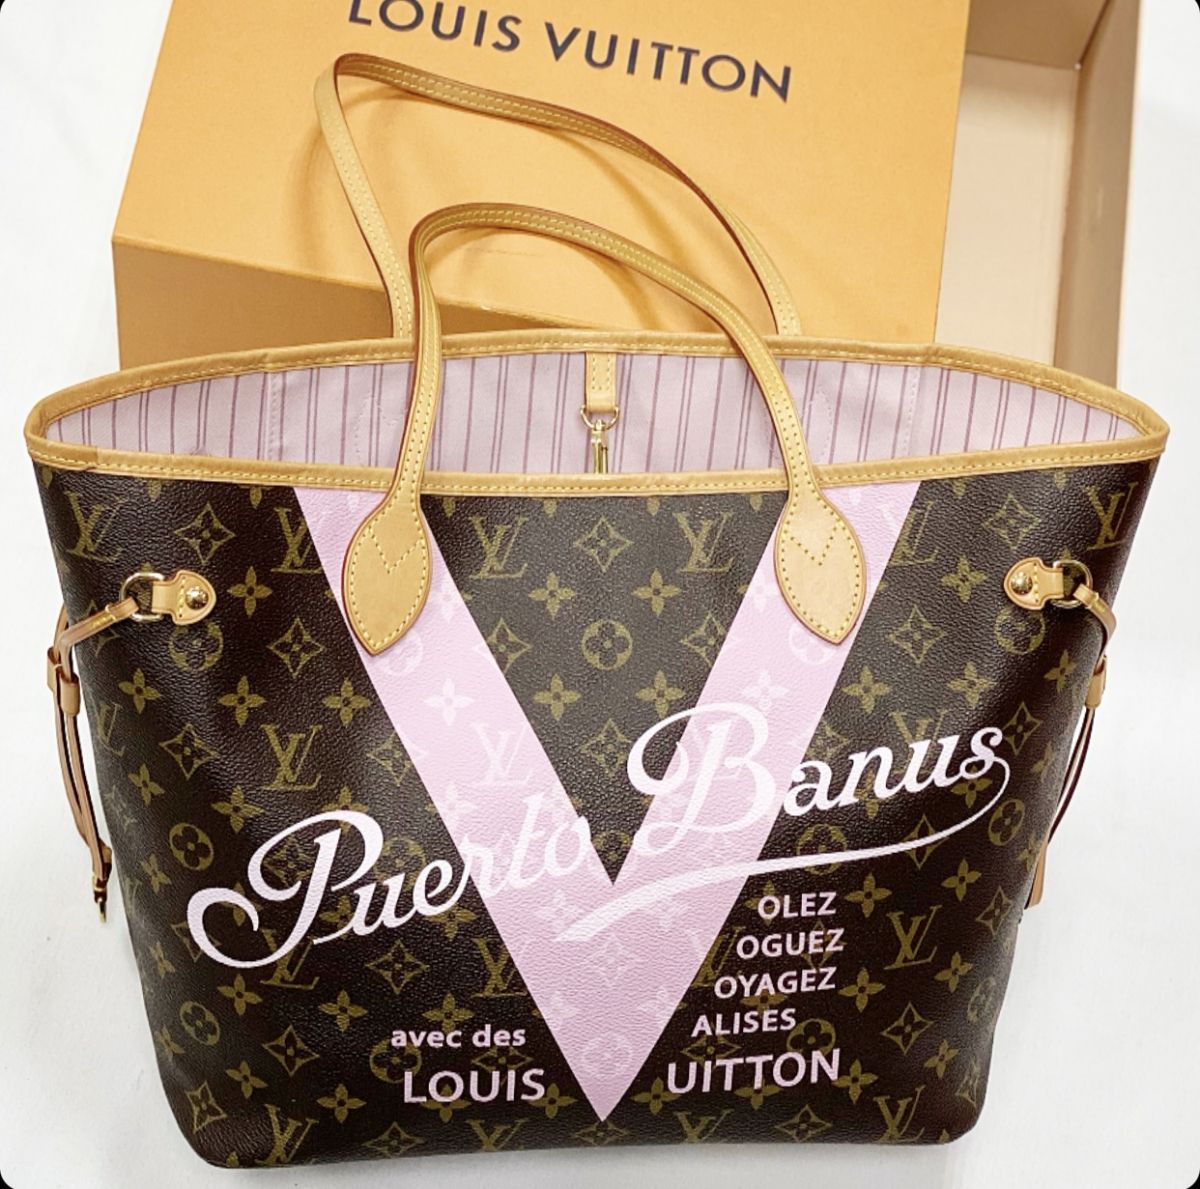 Сумка Louis Vuitton размер 30/27 цена 184 620 руб 